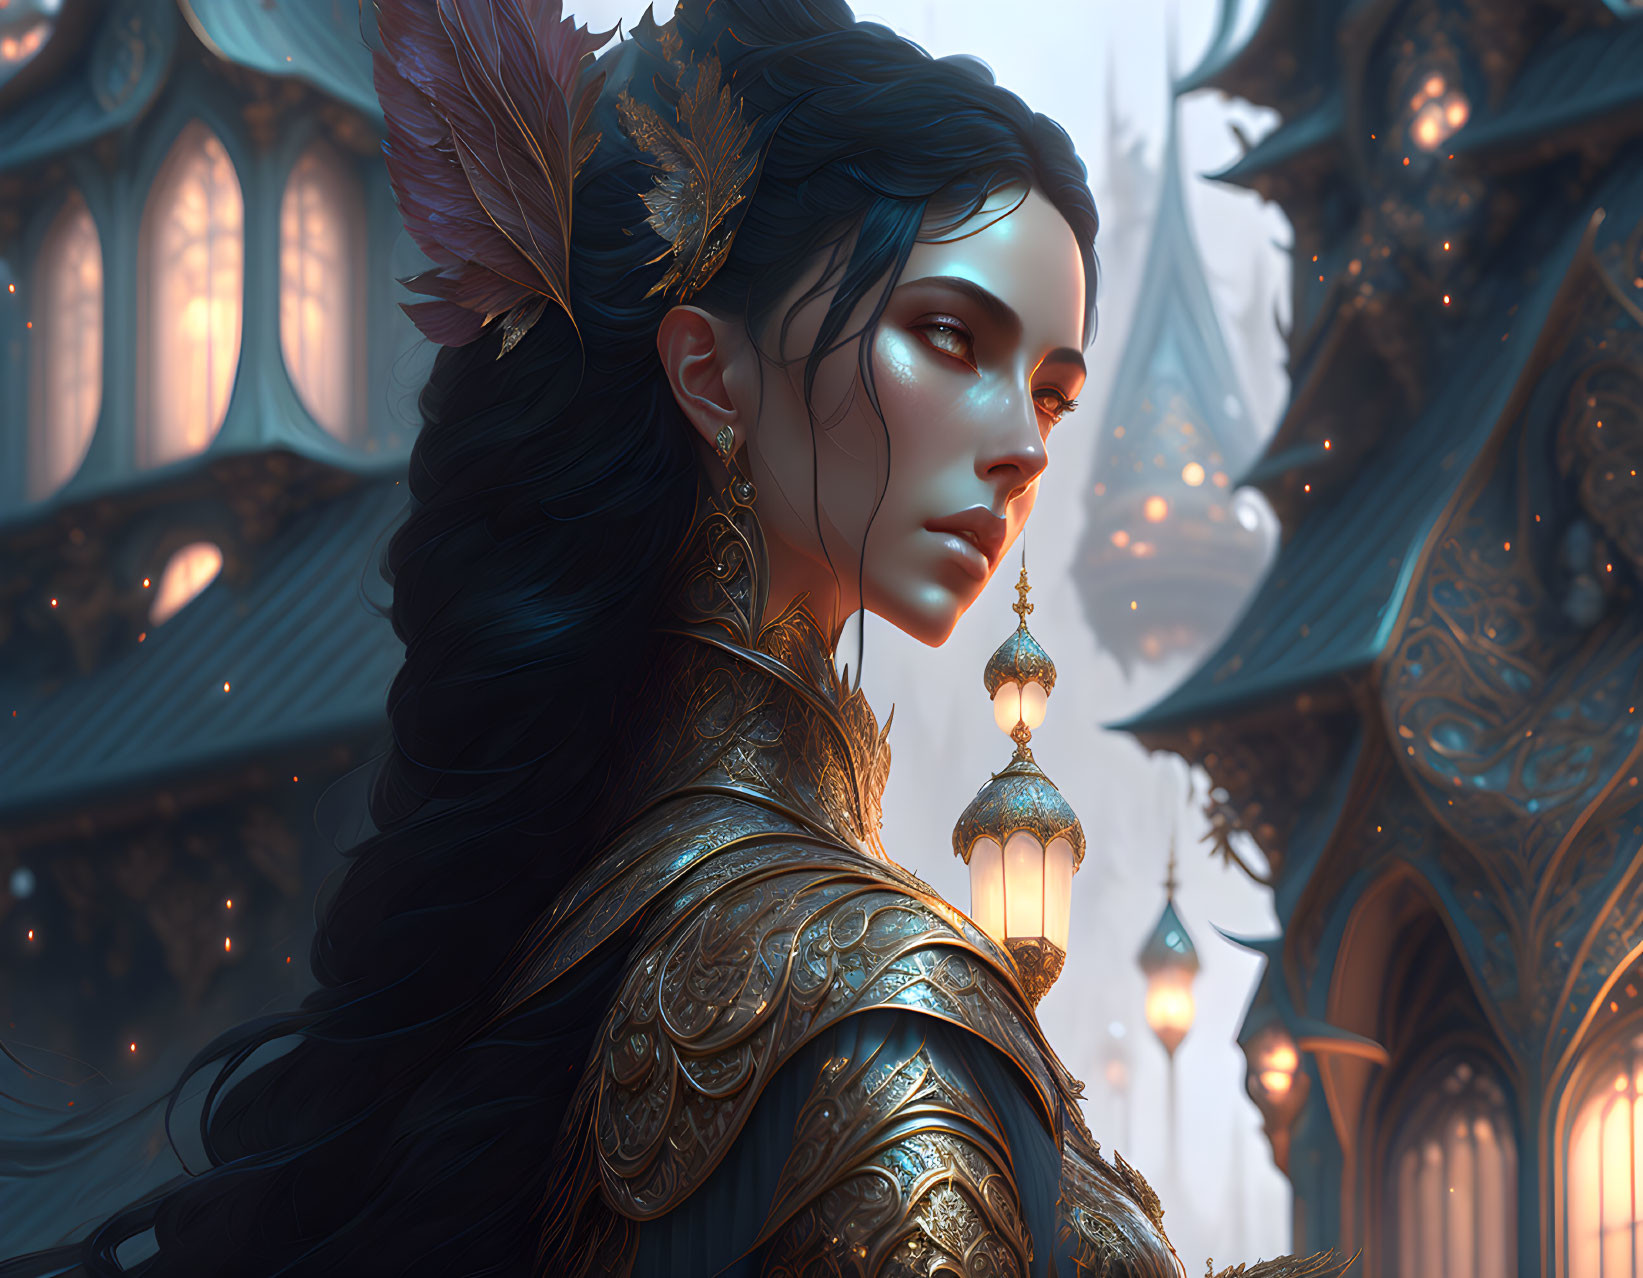 Fantasy digital artwork: Elven woman in golden armor against gothic background